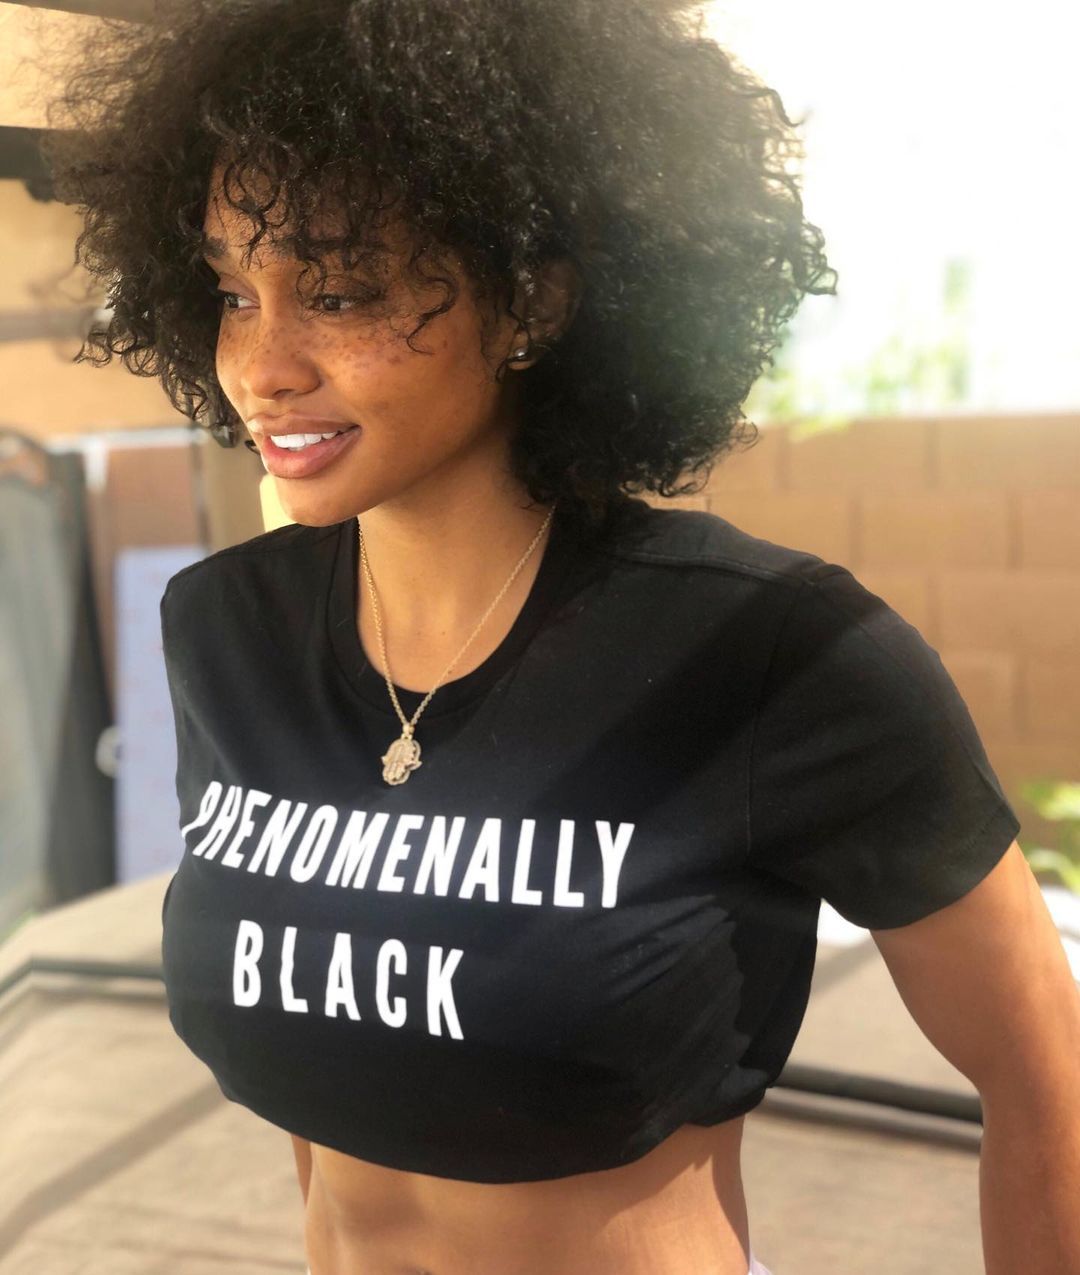 Dylan Gonzalez poses in 'Phenomenally Black' T-shirt.